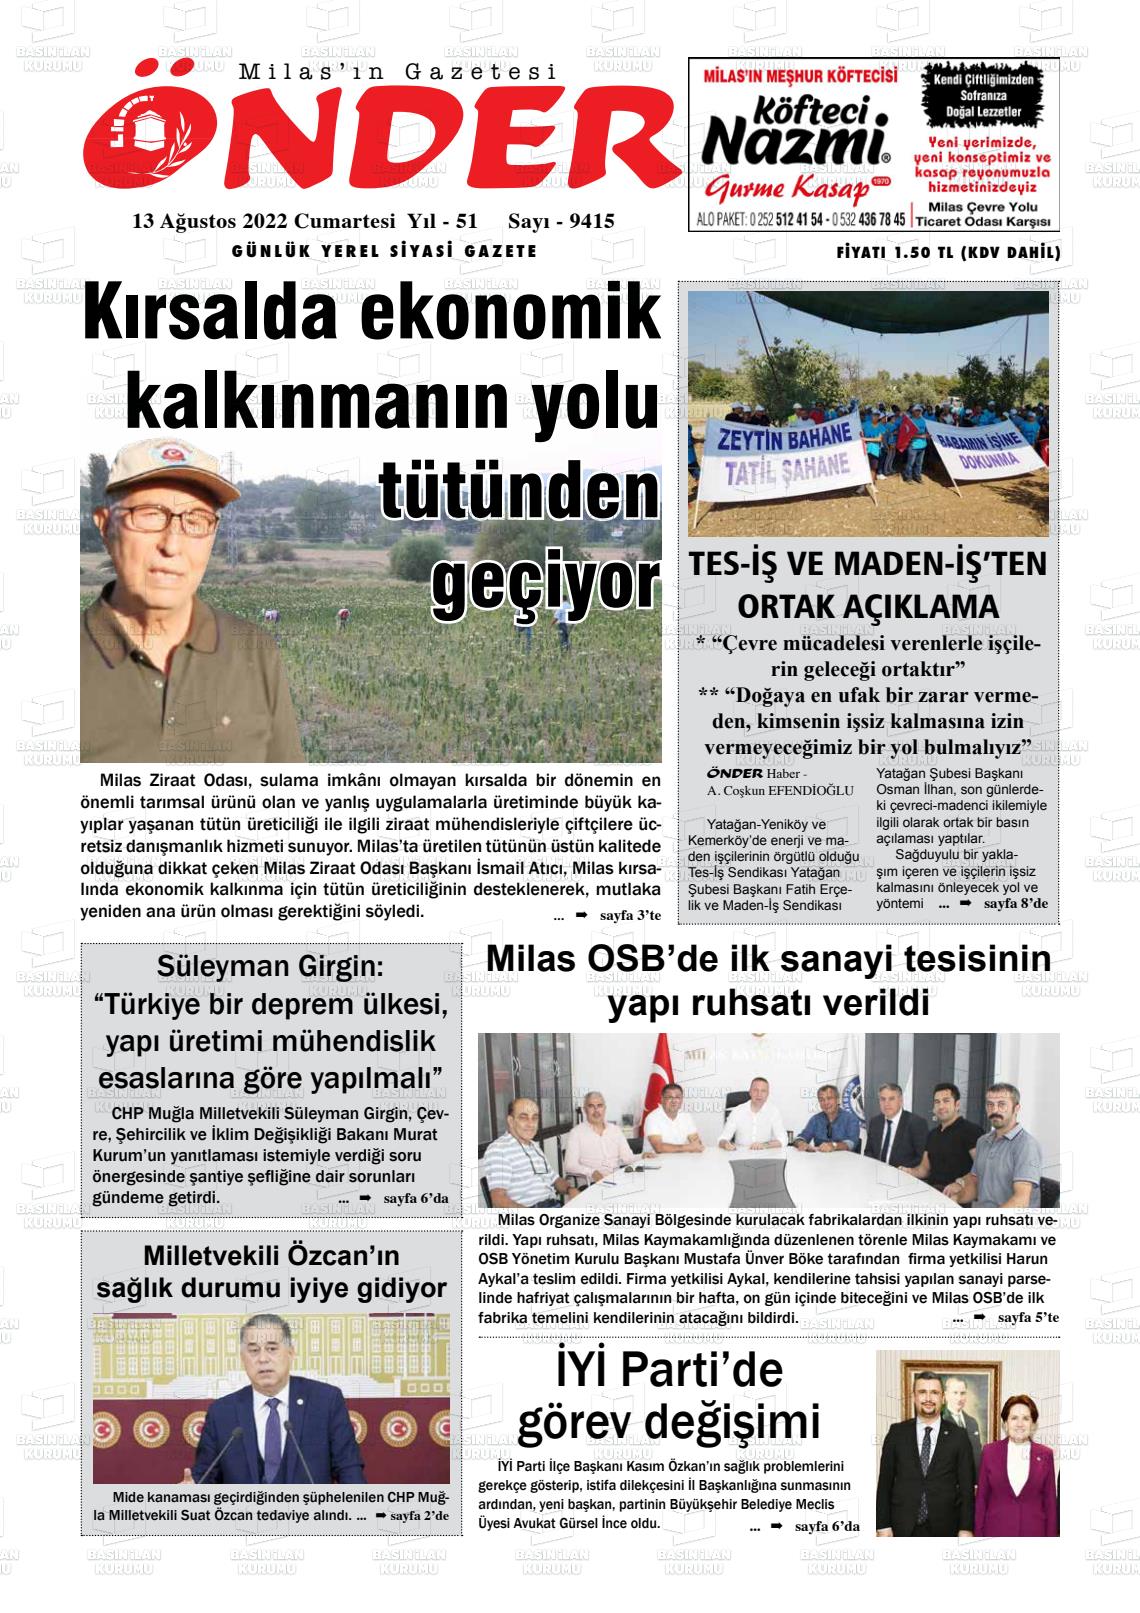 13 Ağustos 2022 Milas Önder Gazete Manşeti